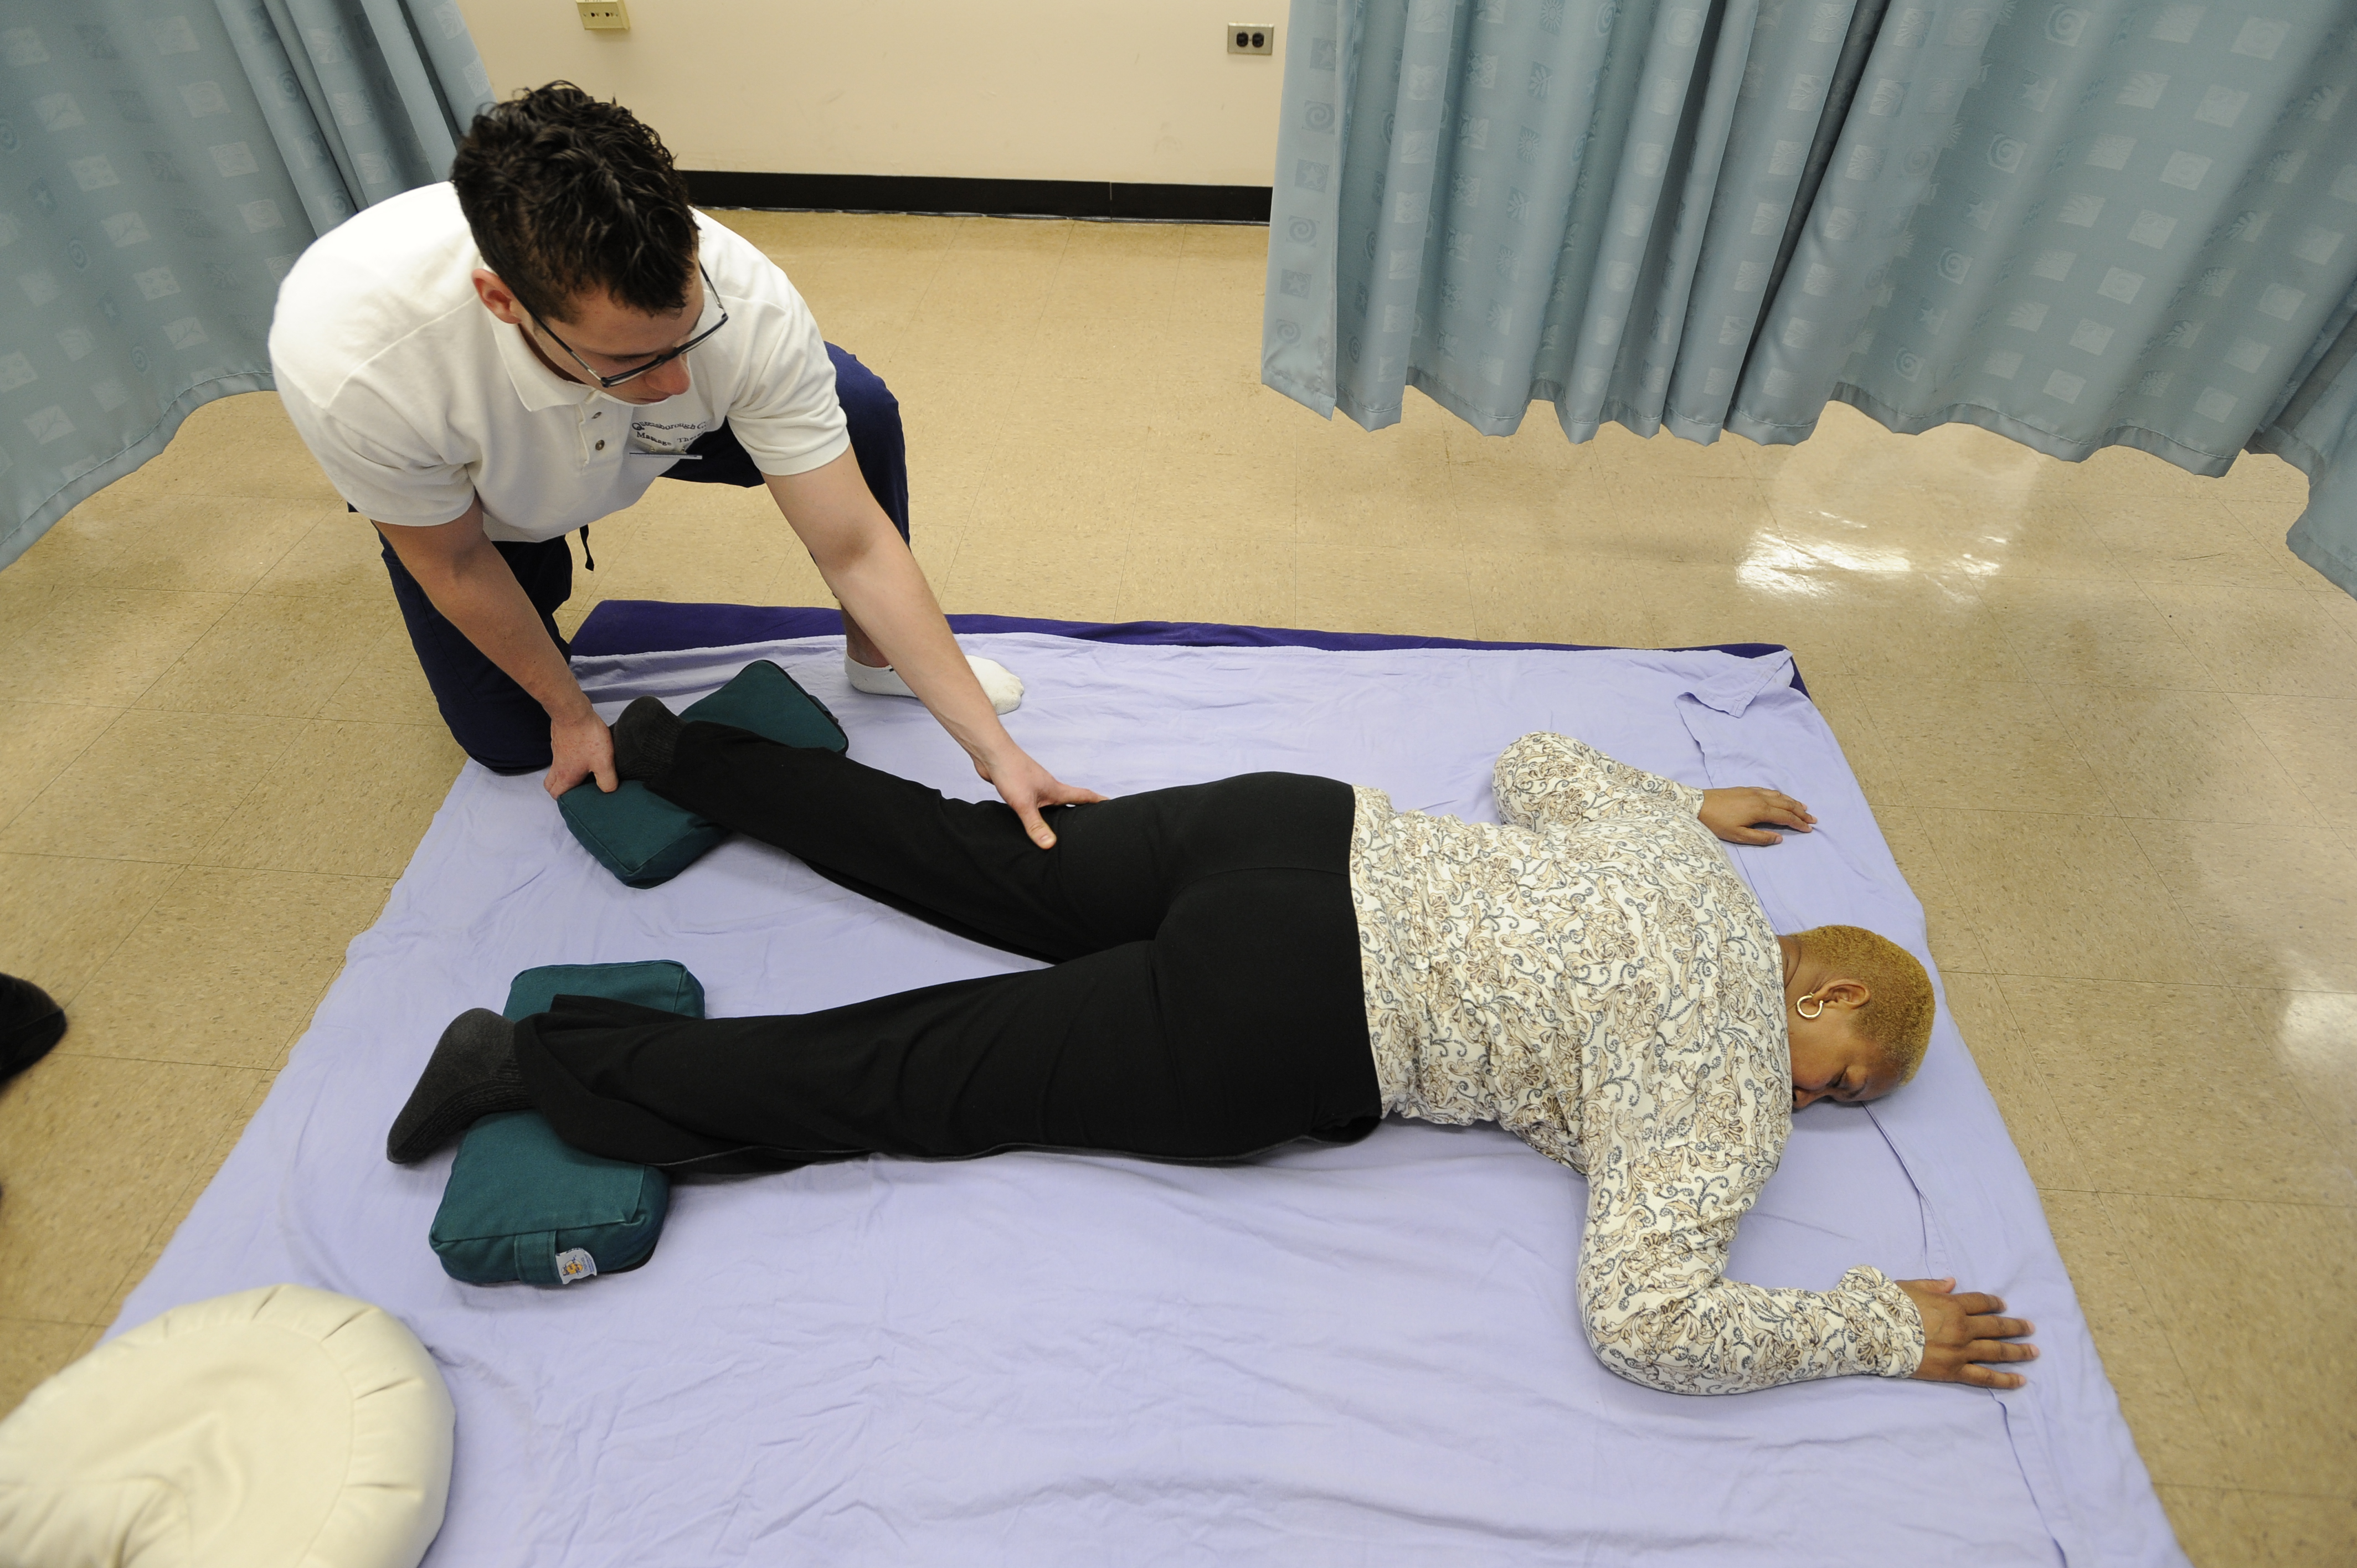 Queensborough Massage Therapy Student practices leg massage on manikin